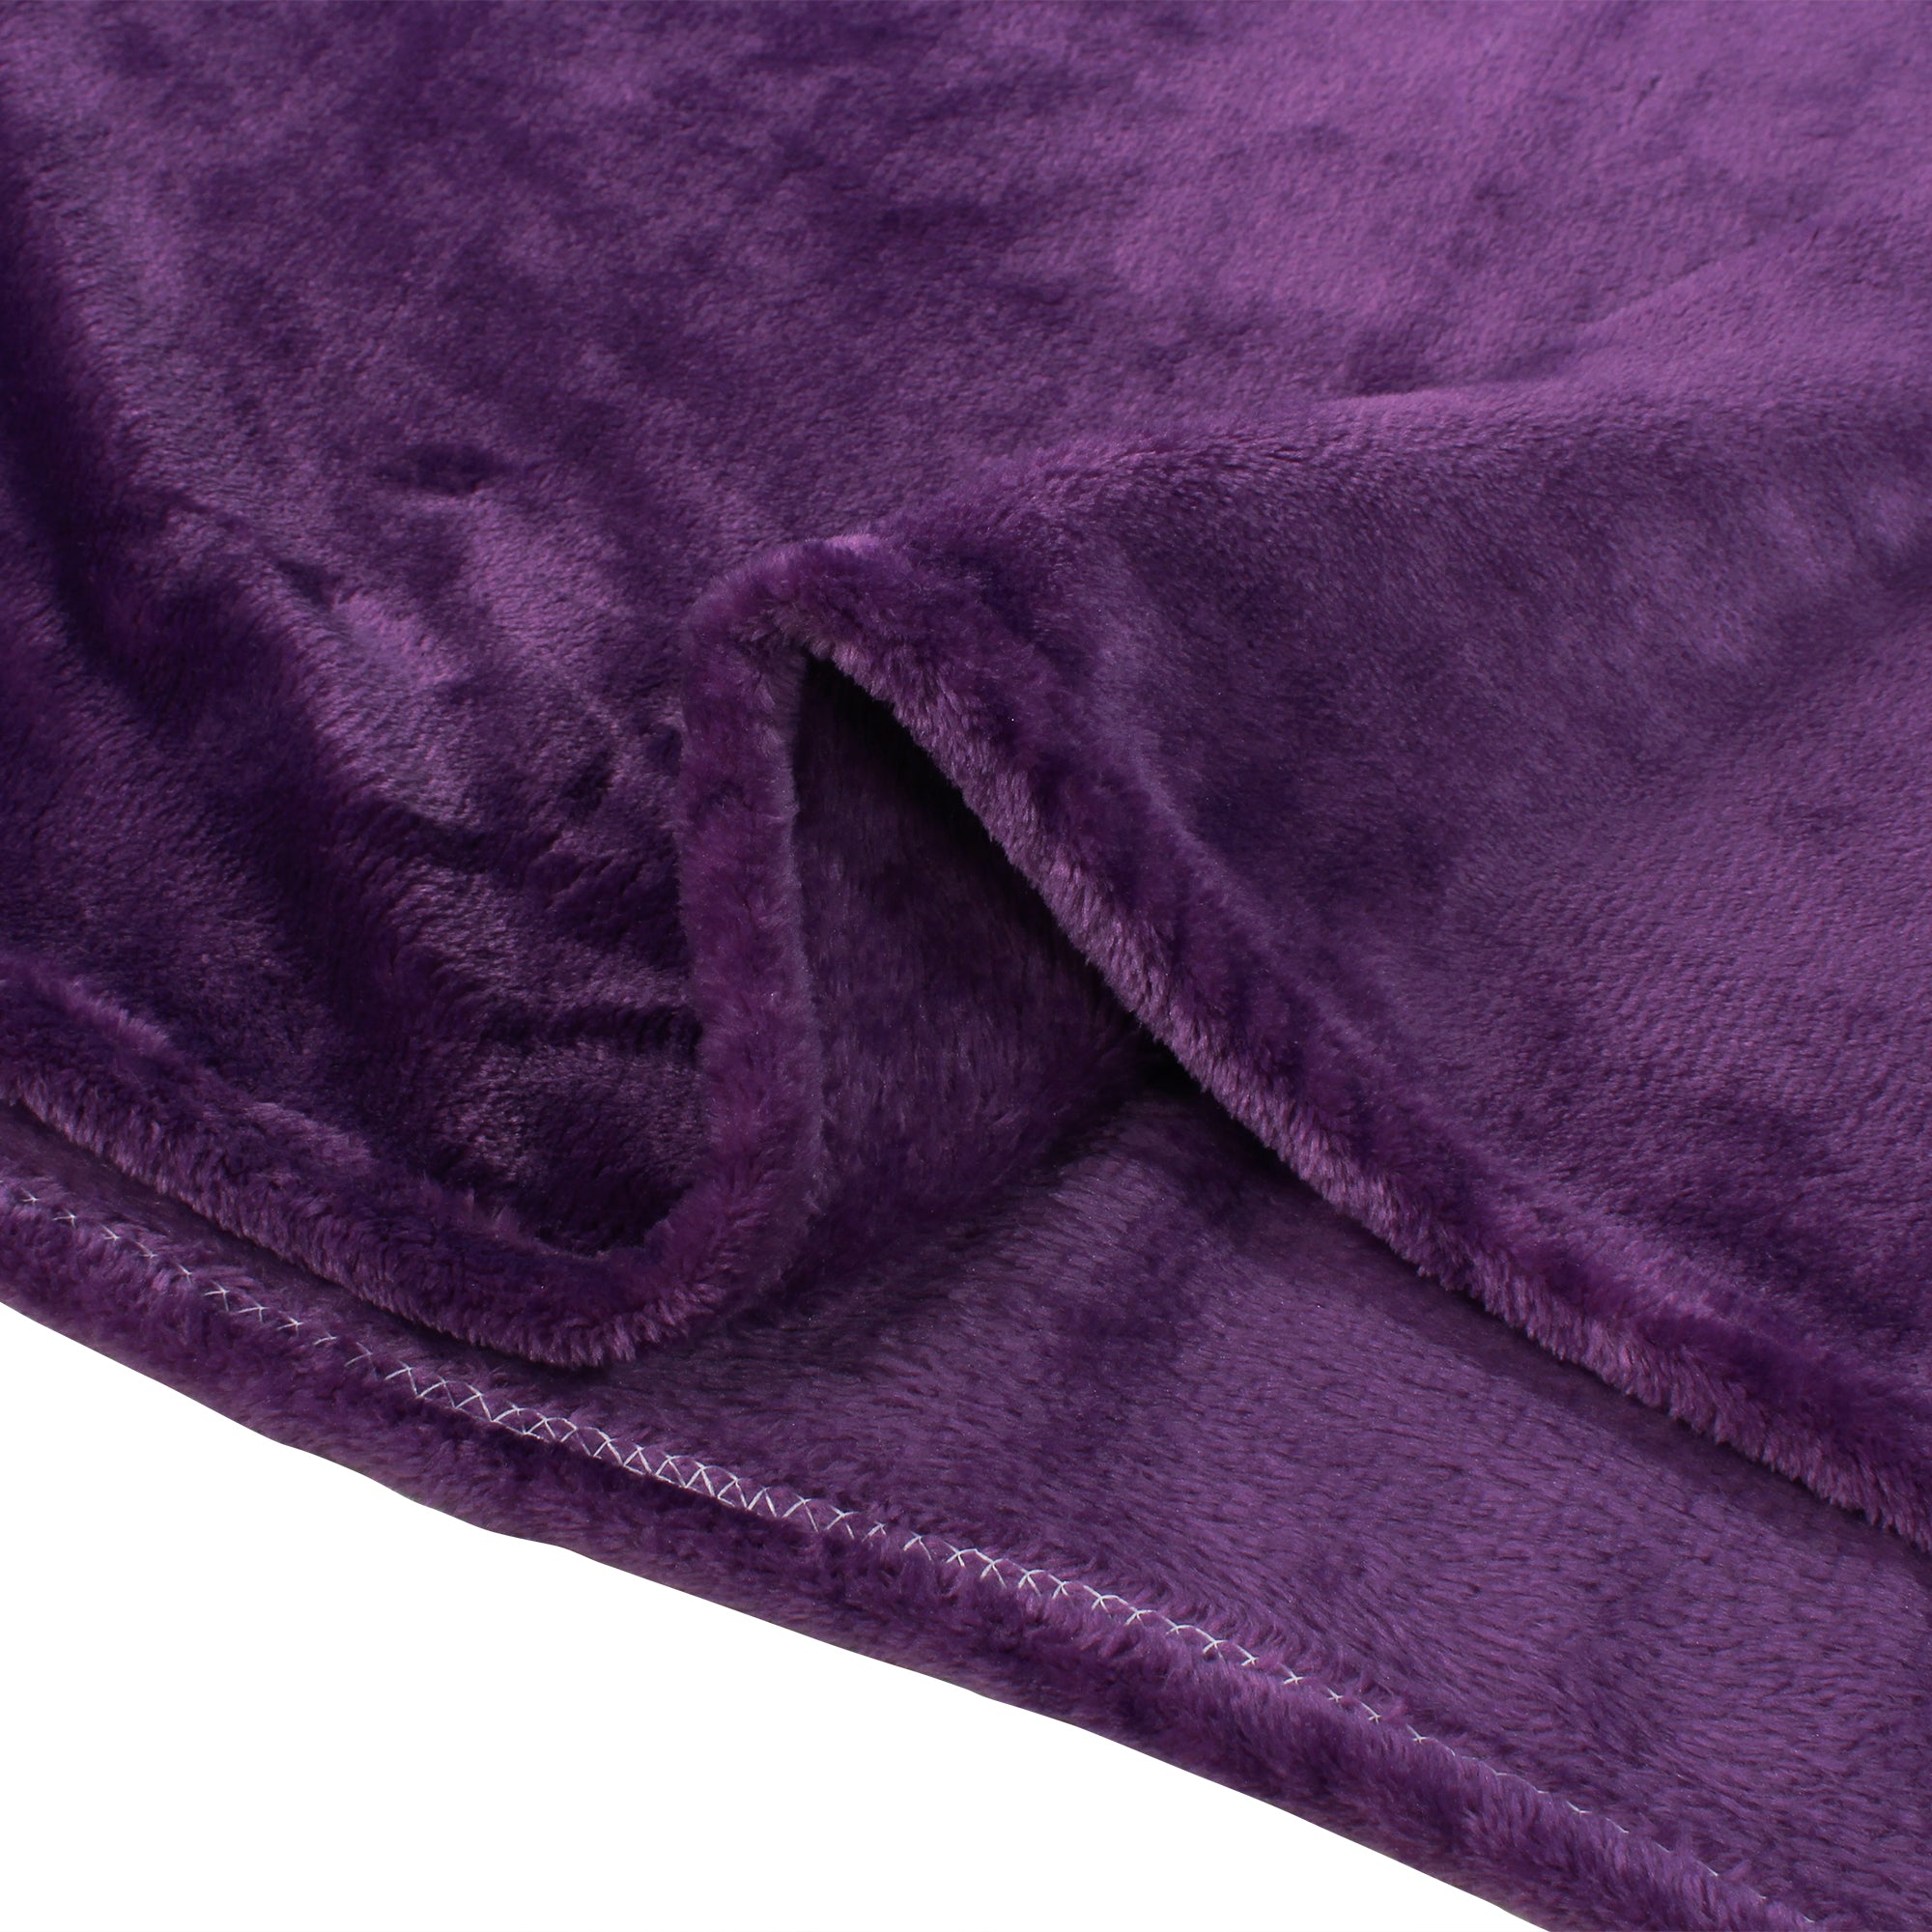 Premium Purple Double Flannel Blanket